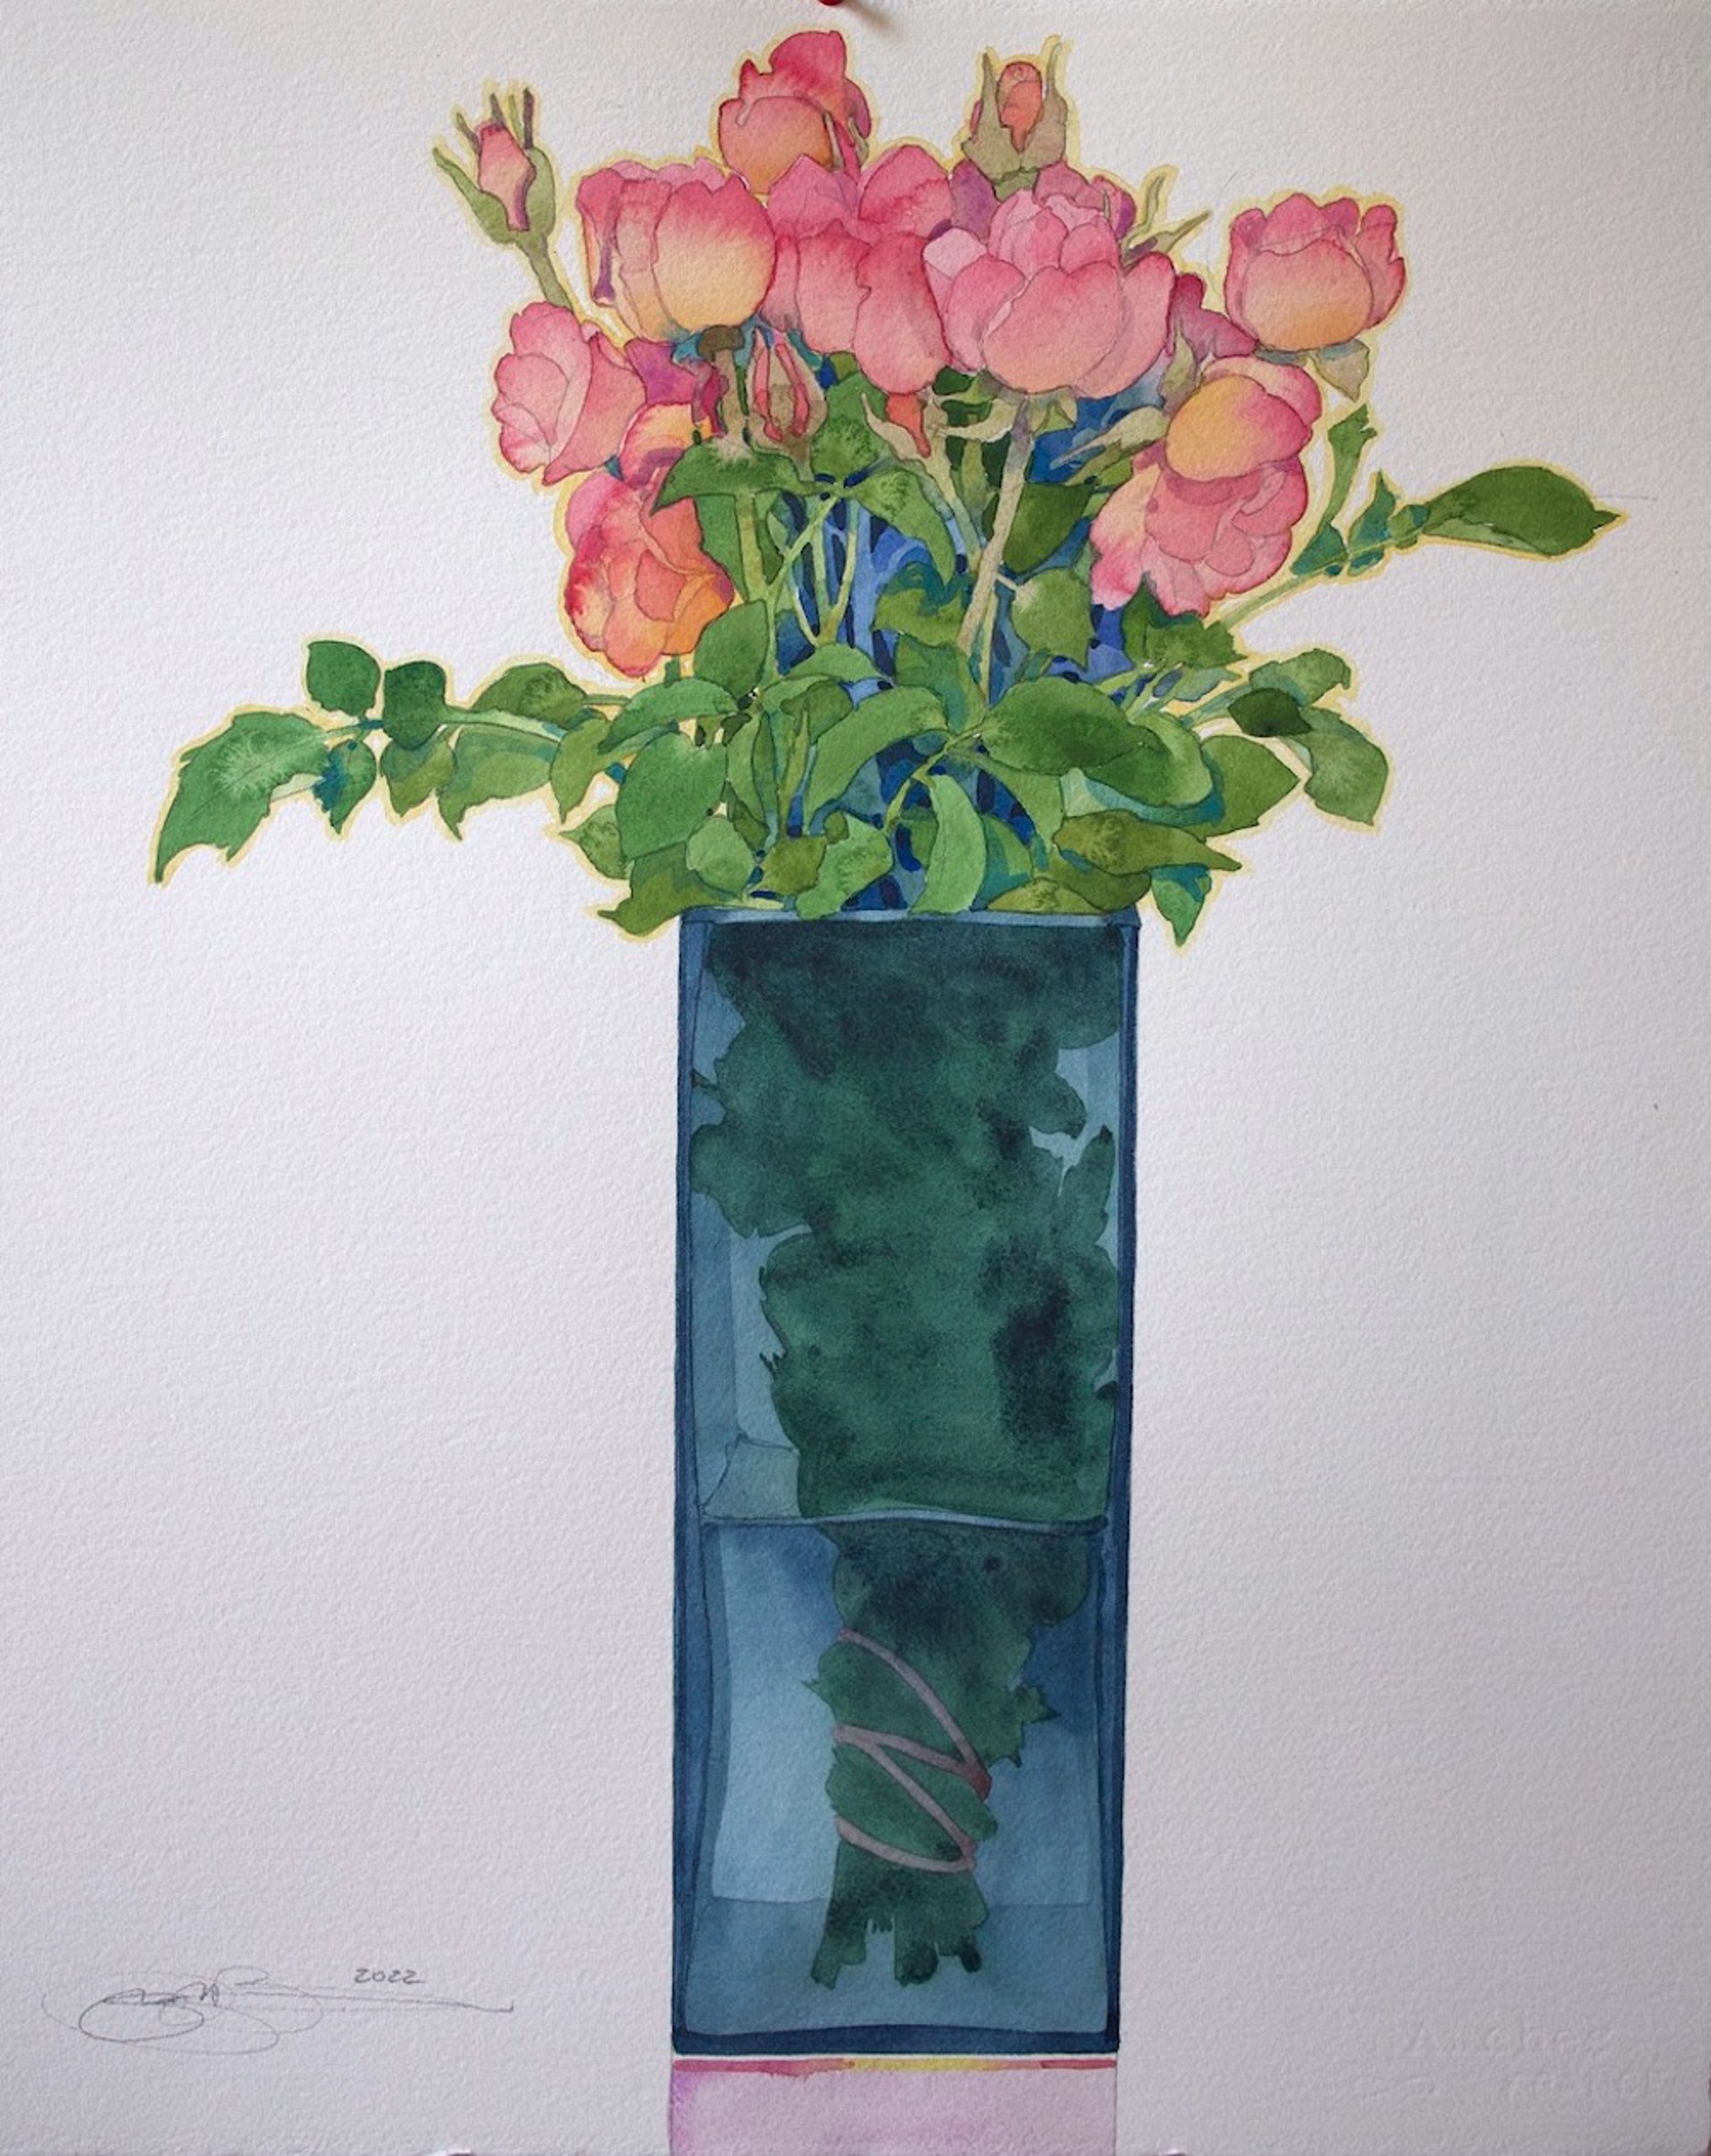 Roses in a Blue Vase by Gary Bukovnik